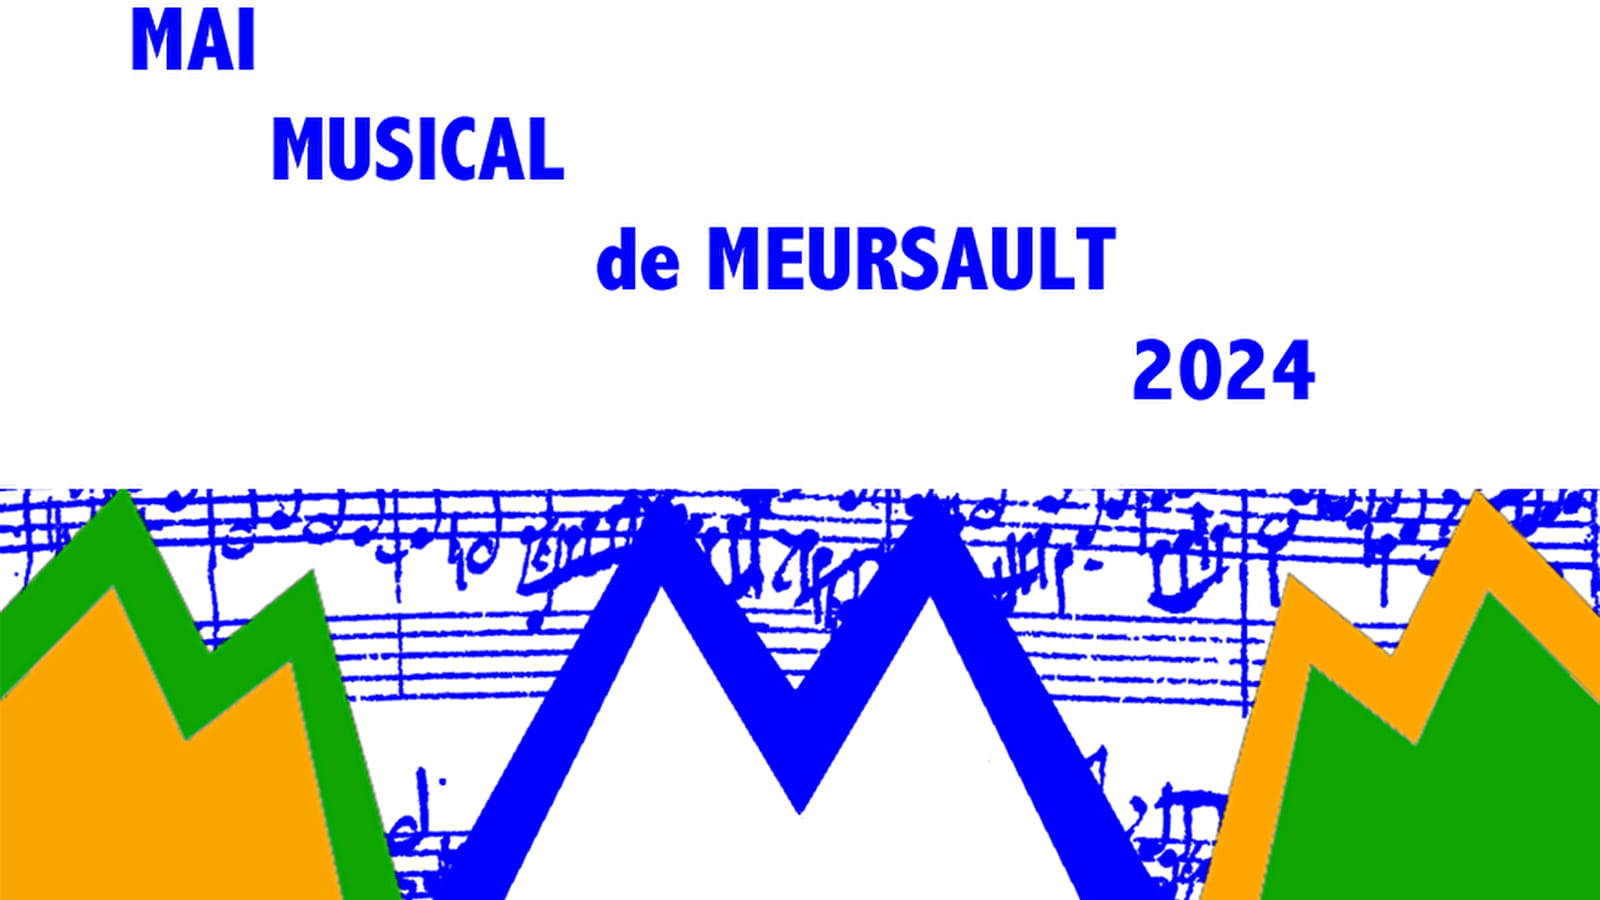 Le Mai musical de Meursault